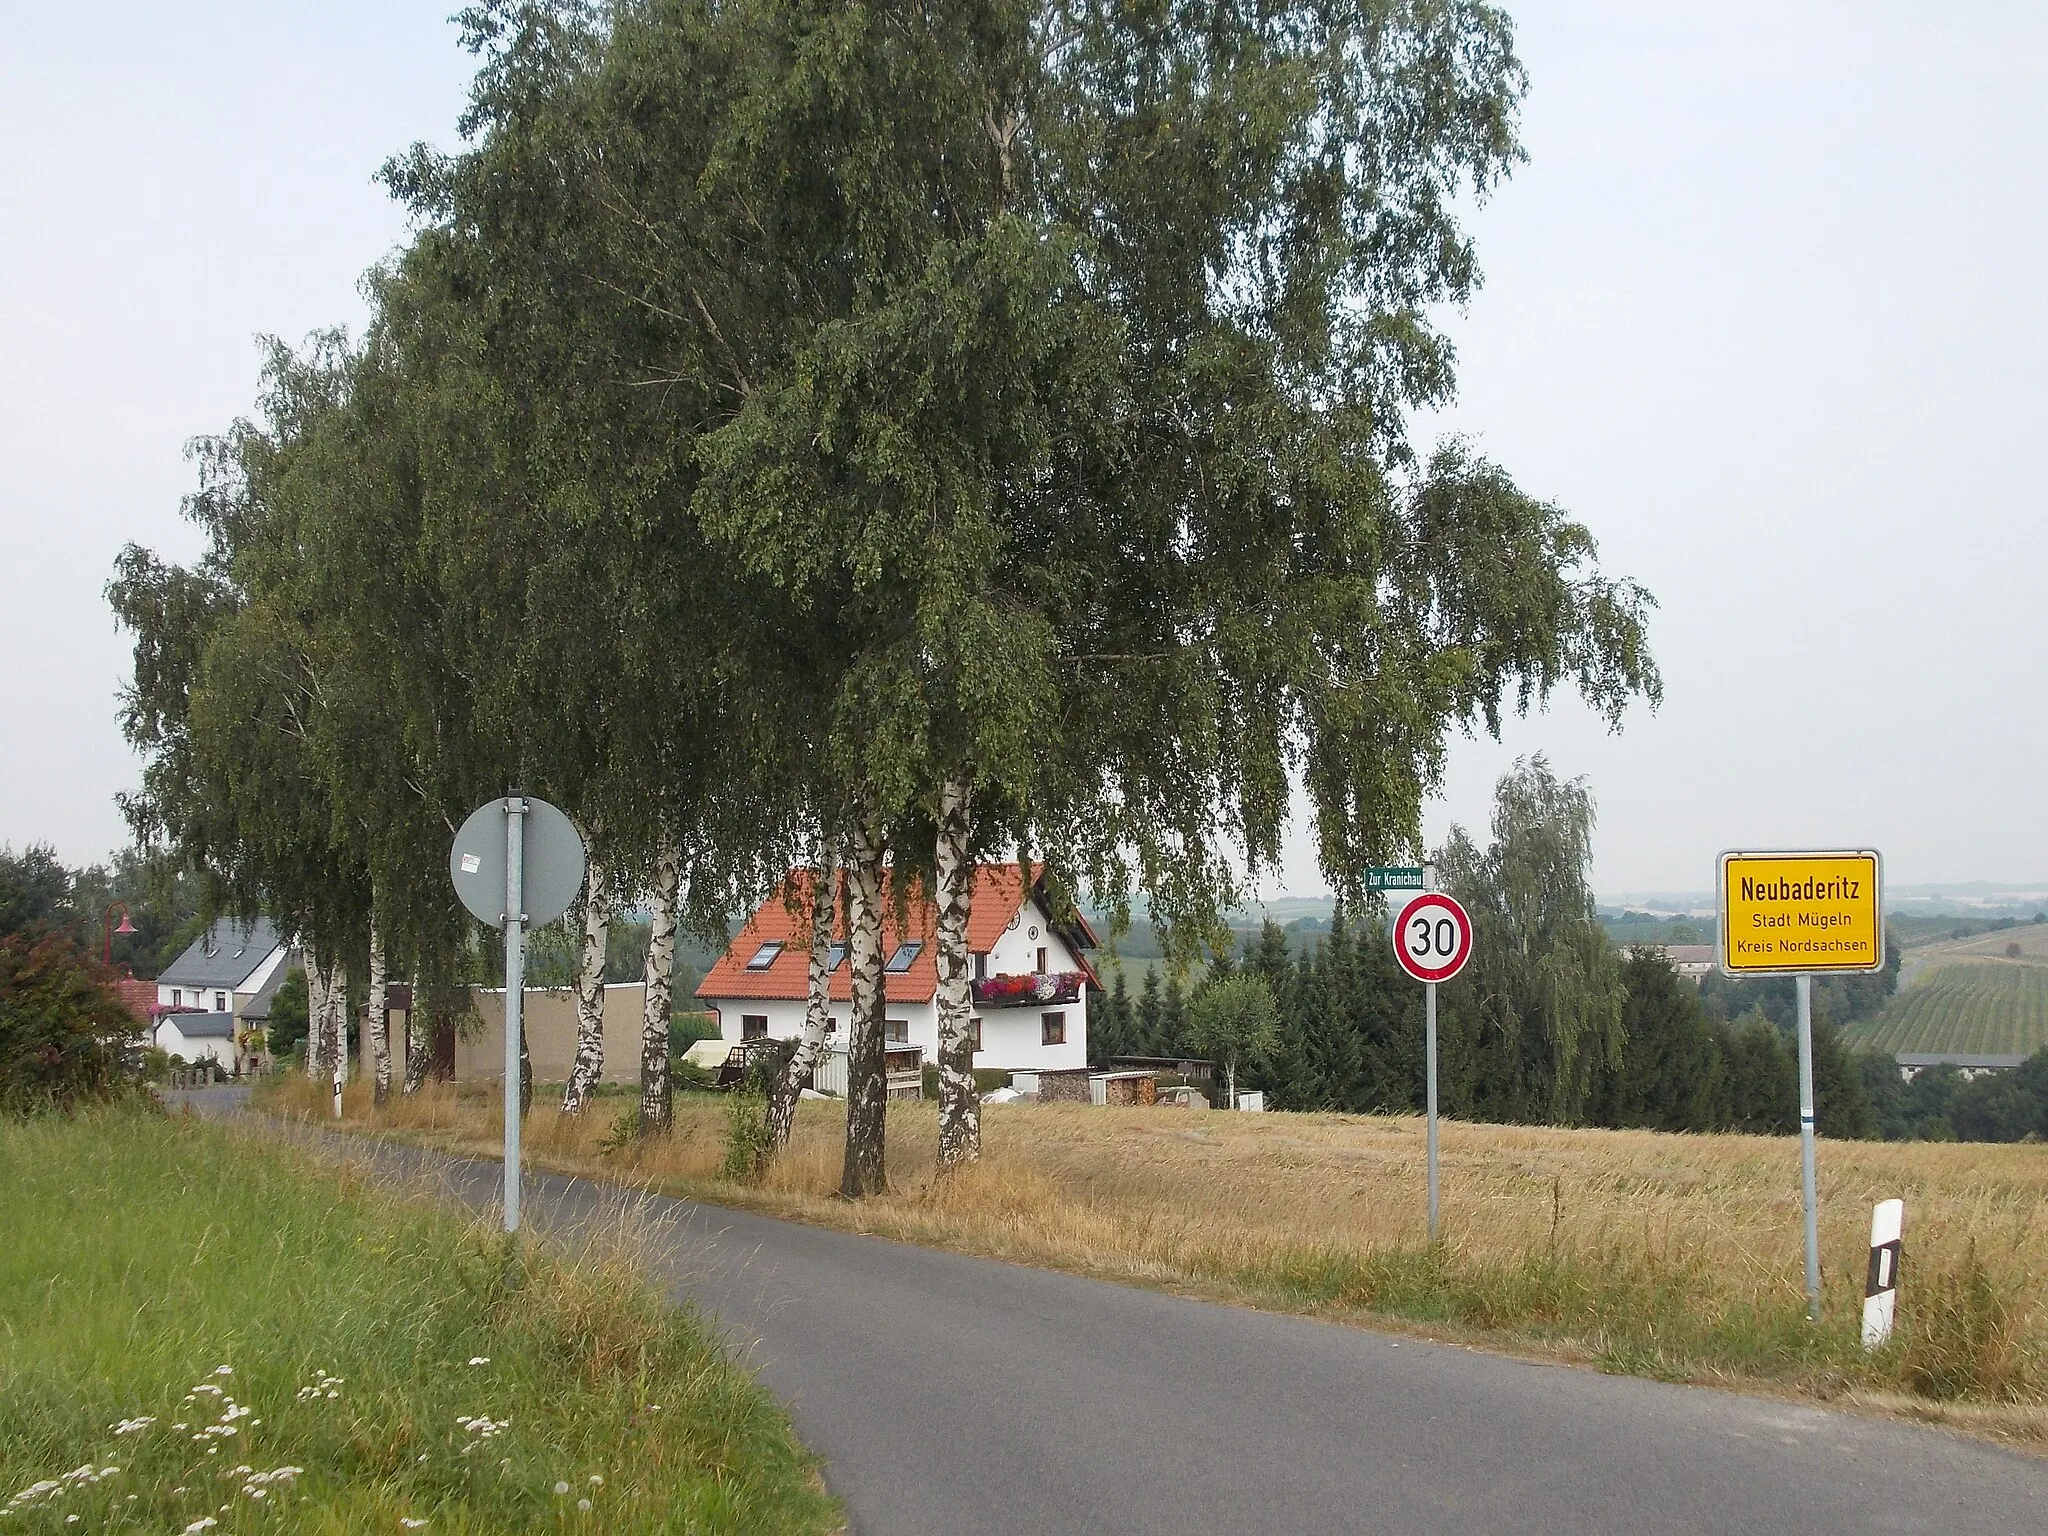 Photo showing: Entrance to the village of Neubaderitz (Mügeln, Nordsachsen district, Saxony)